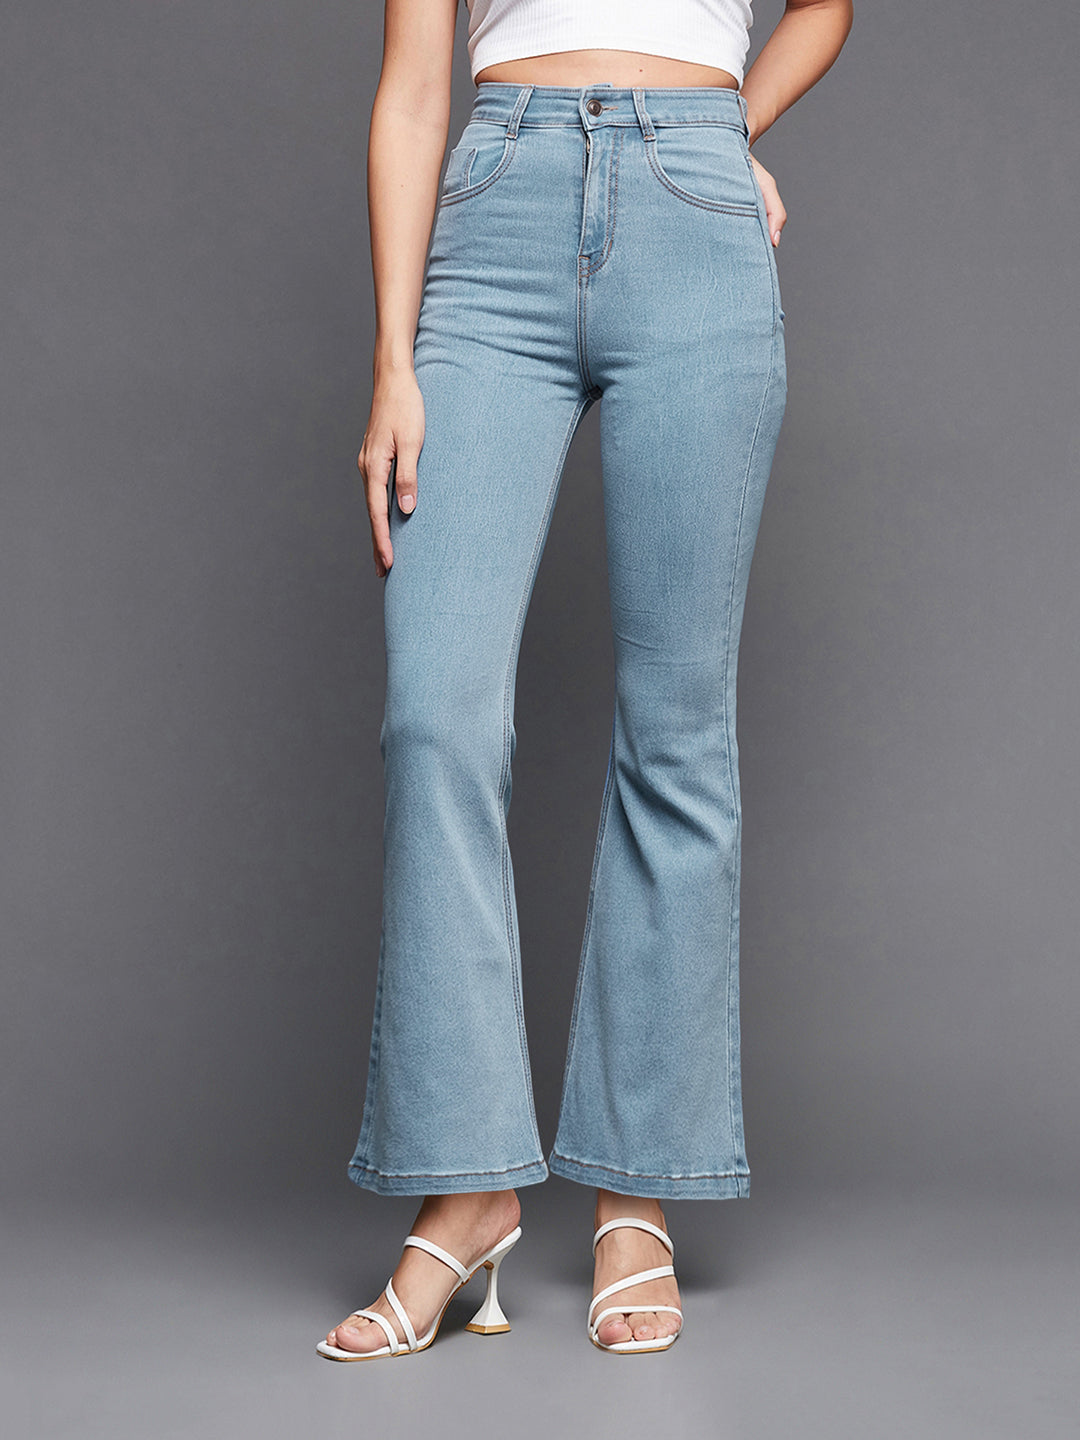 Women's Light Blue Bootcut High rise Stretchable Denim Jeans